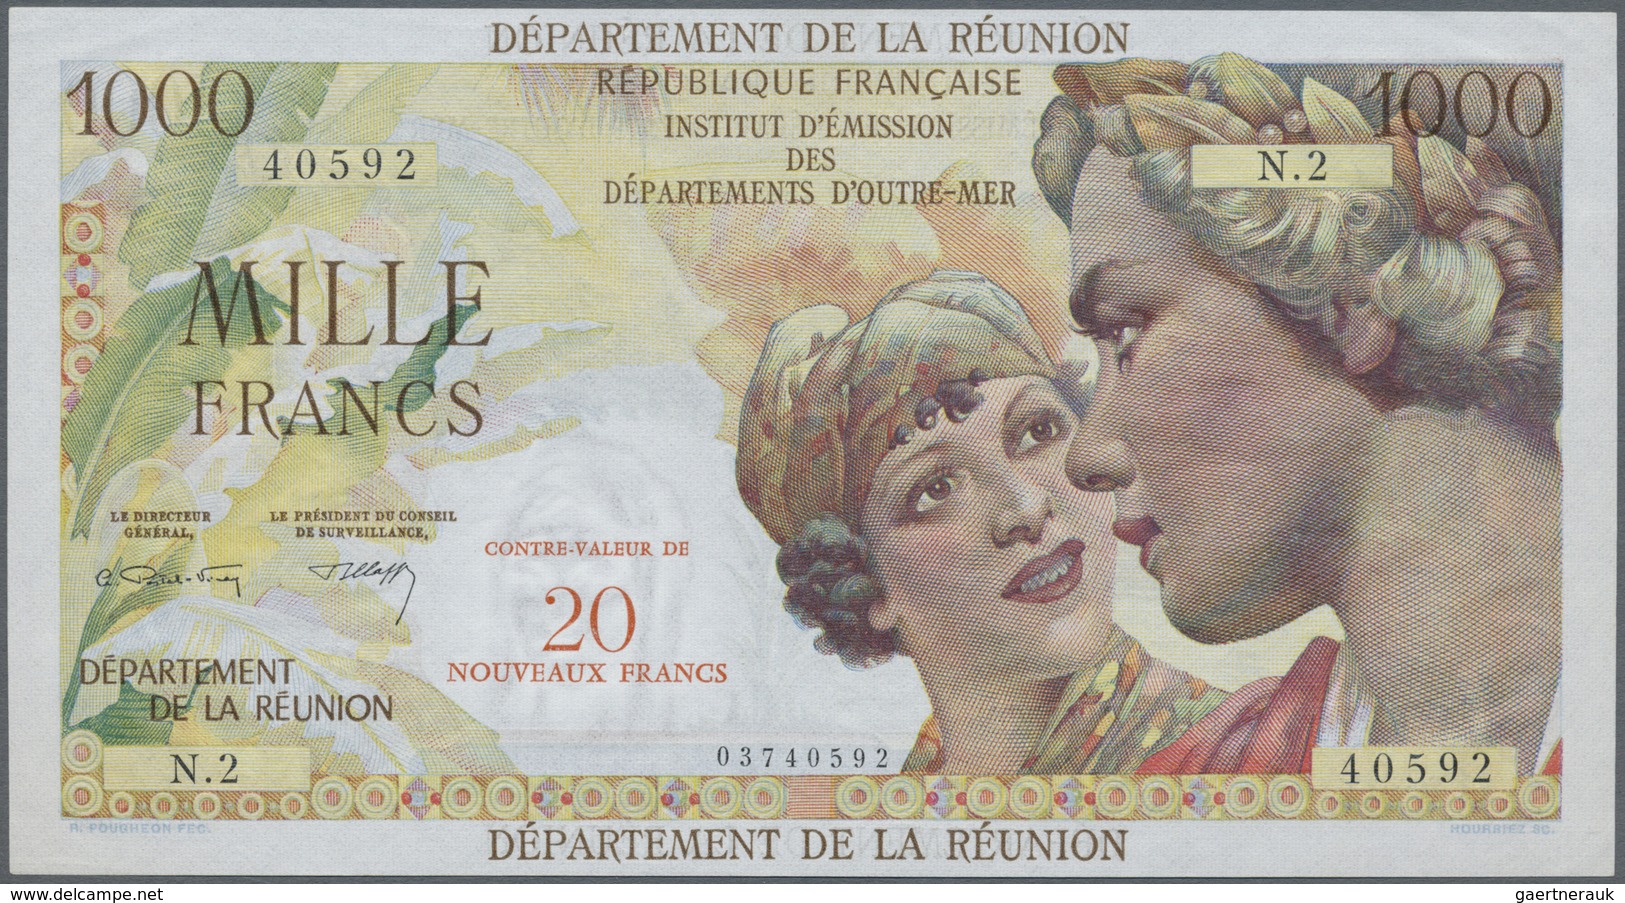 Réunion: 20 NF On 1000 Francs ND(1960) P. 55, Only A Light Center Bend And Minor Corner Folding, Cri - Reunion